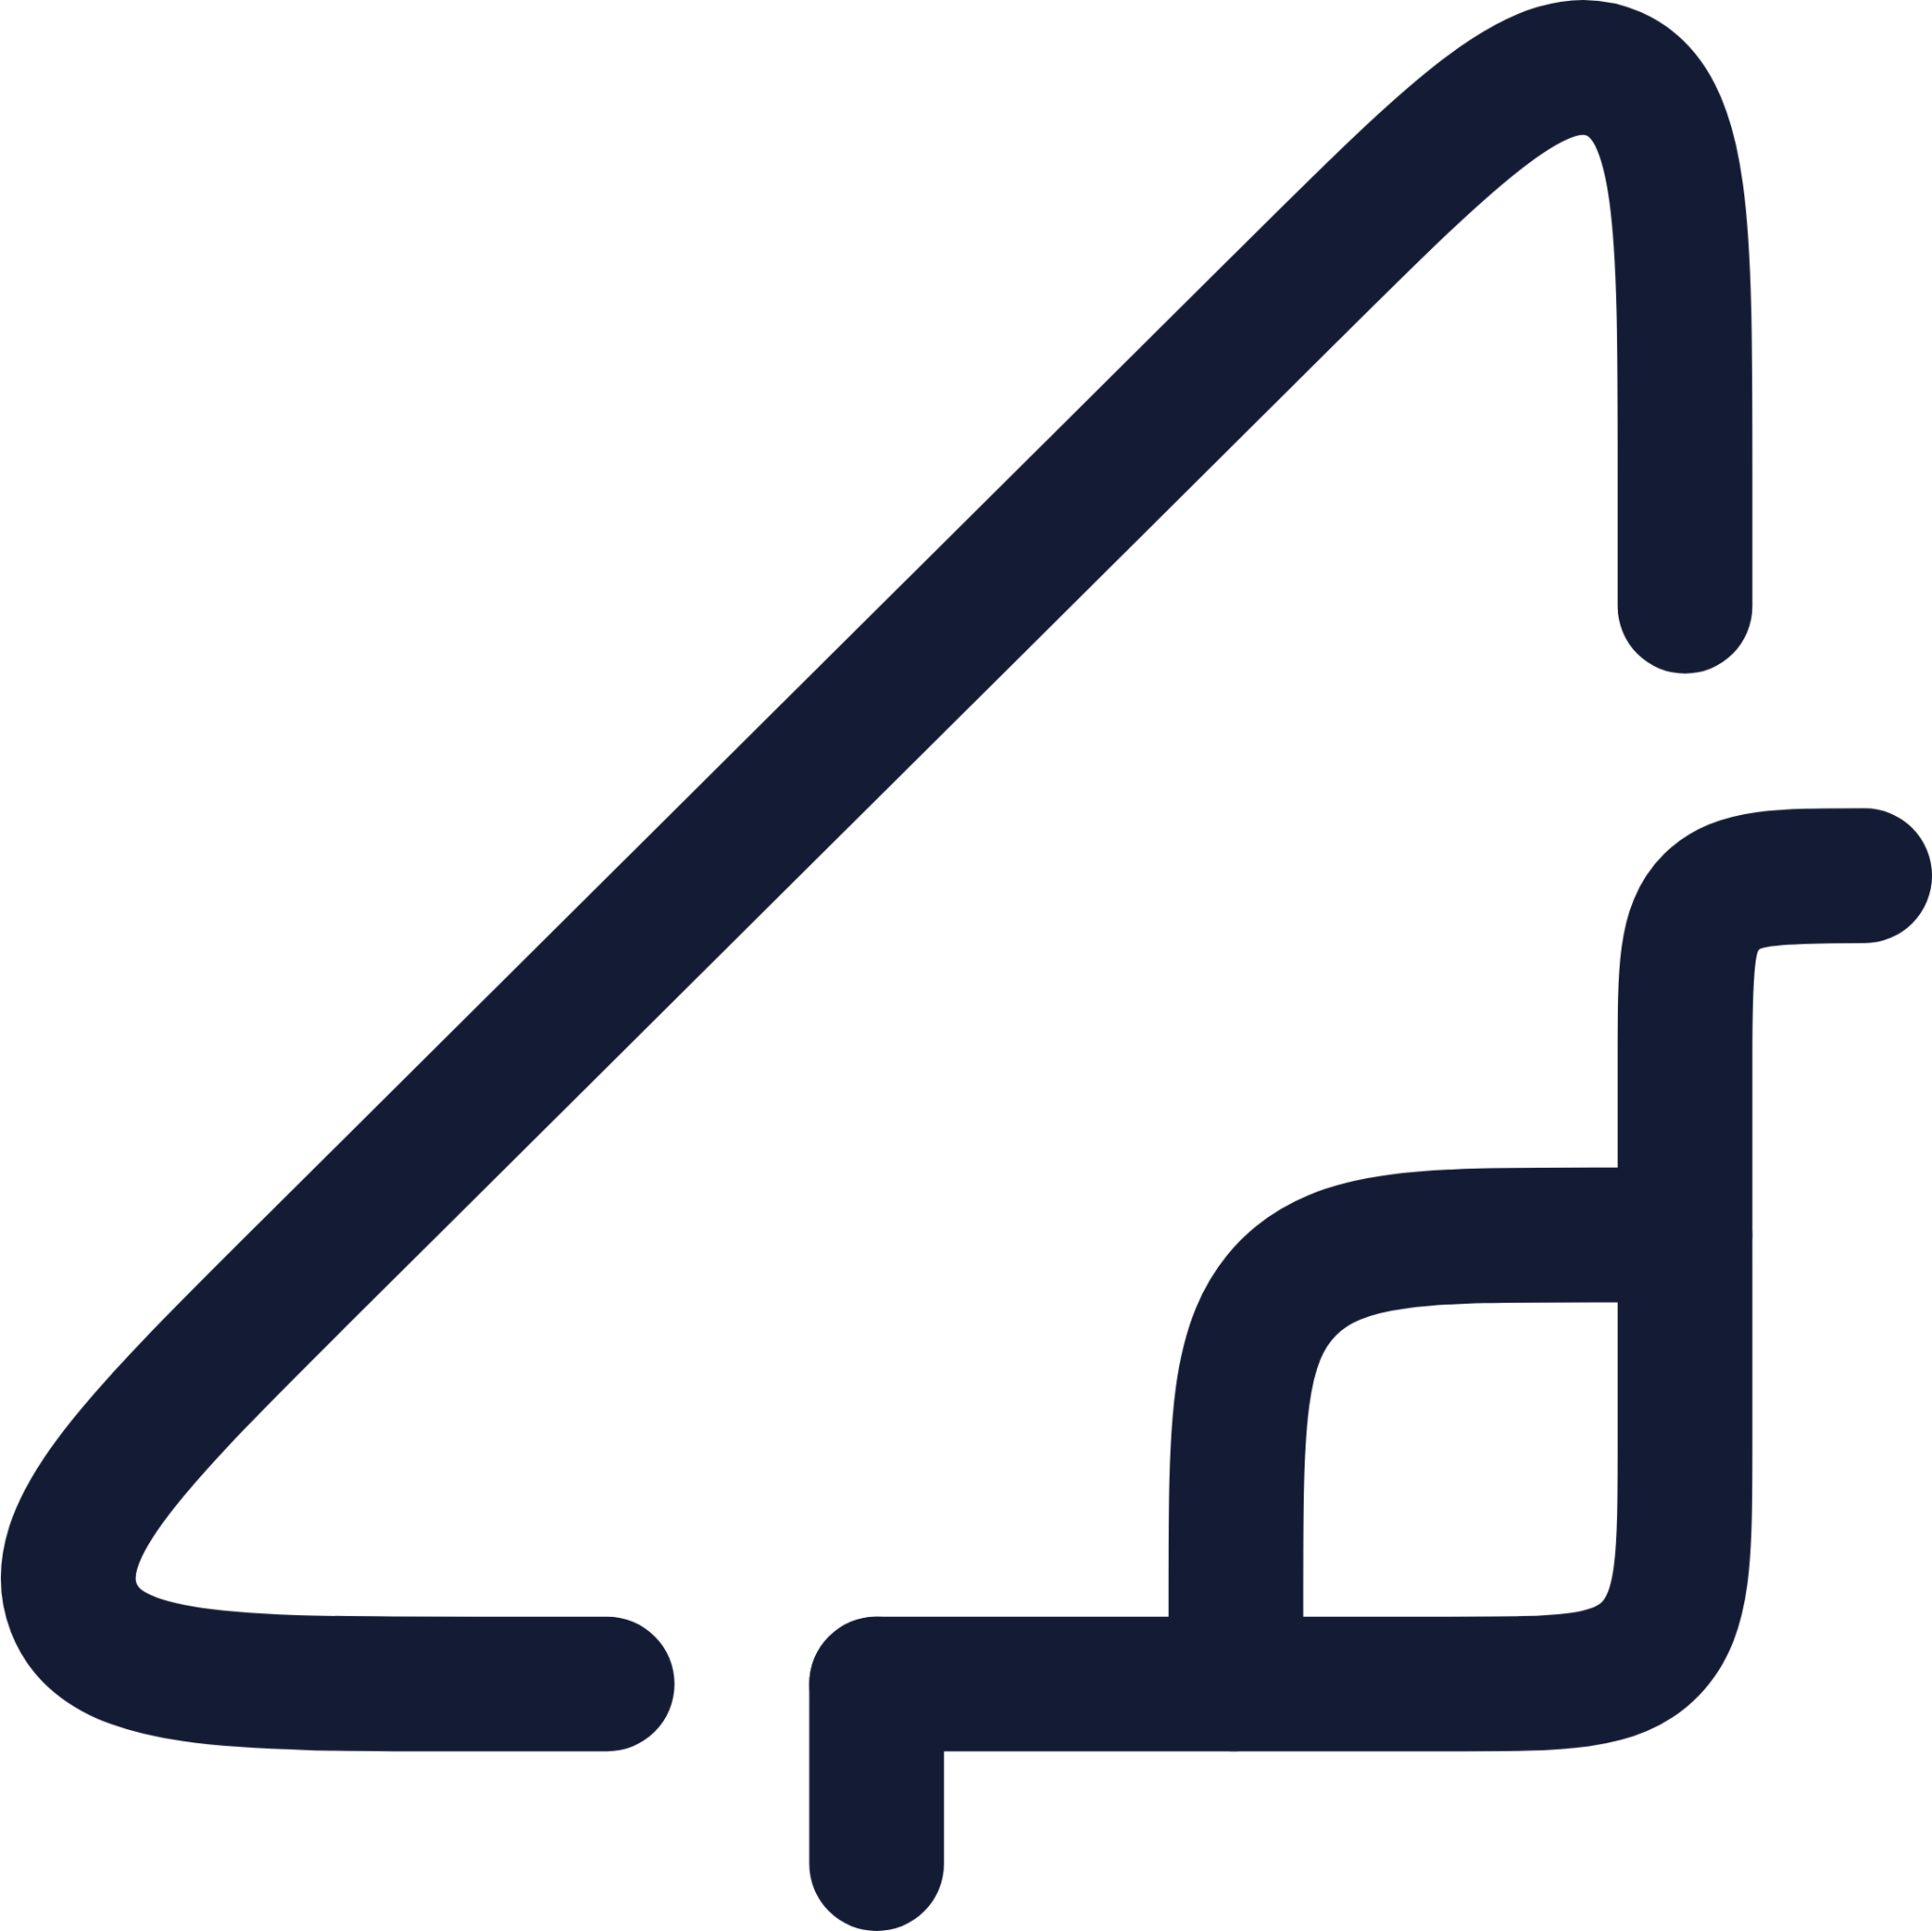 left triangle icon